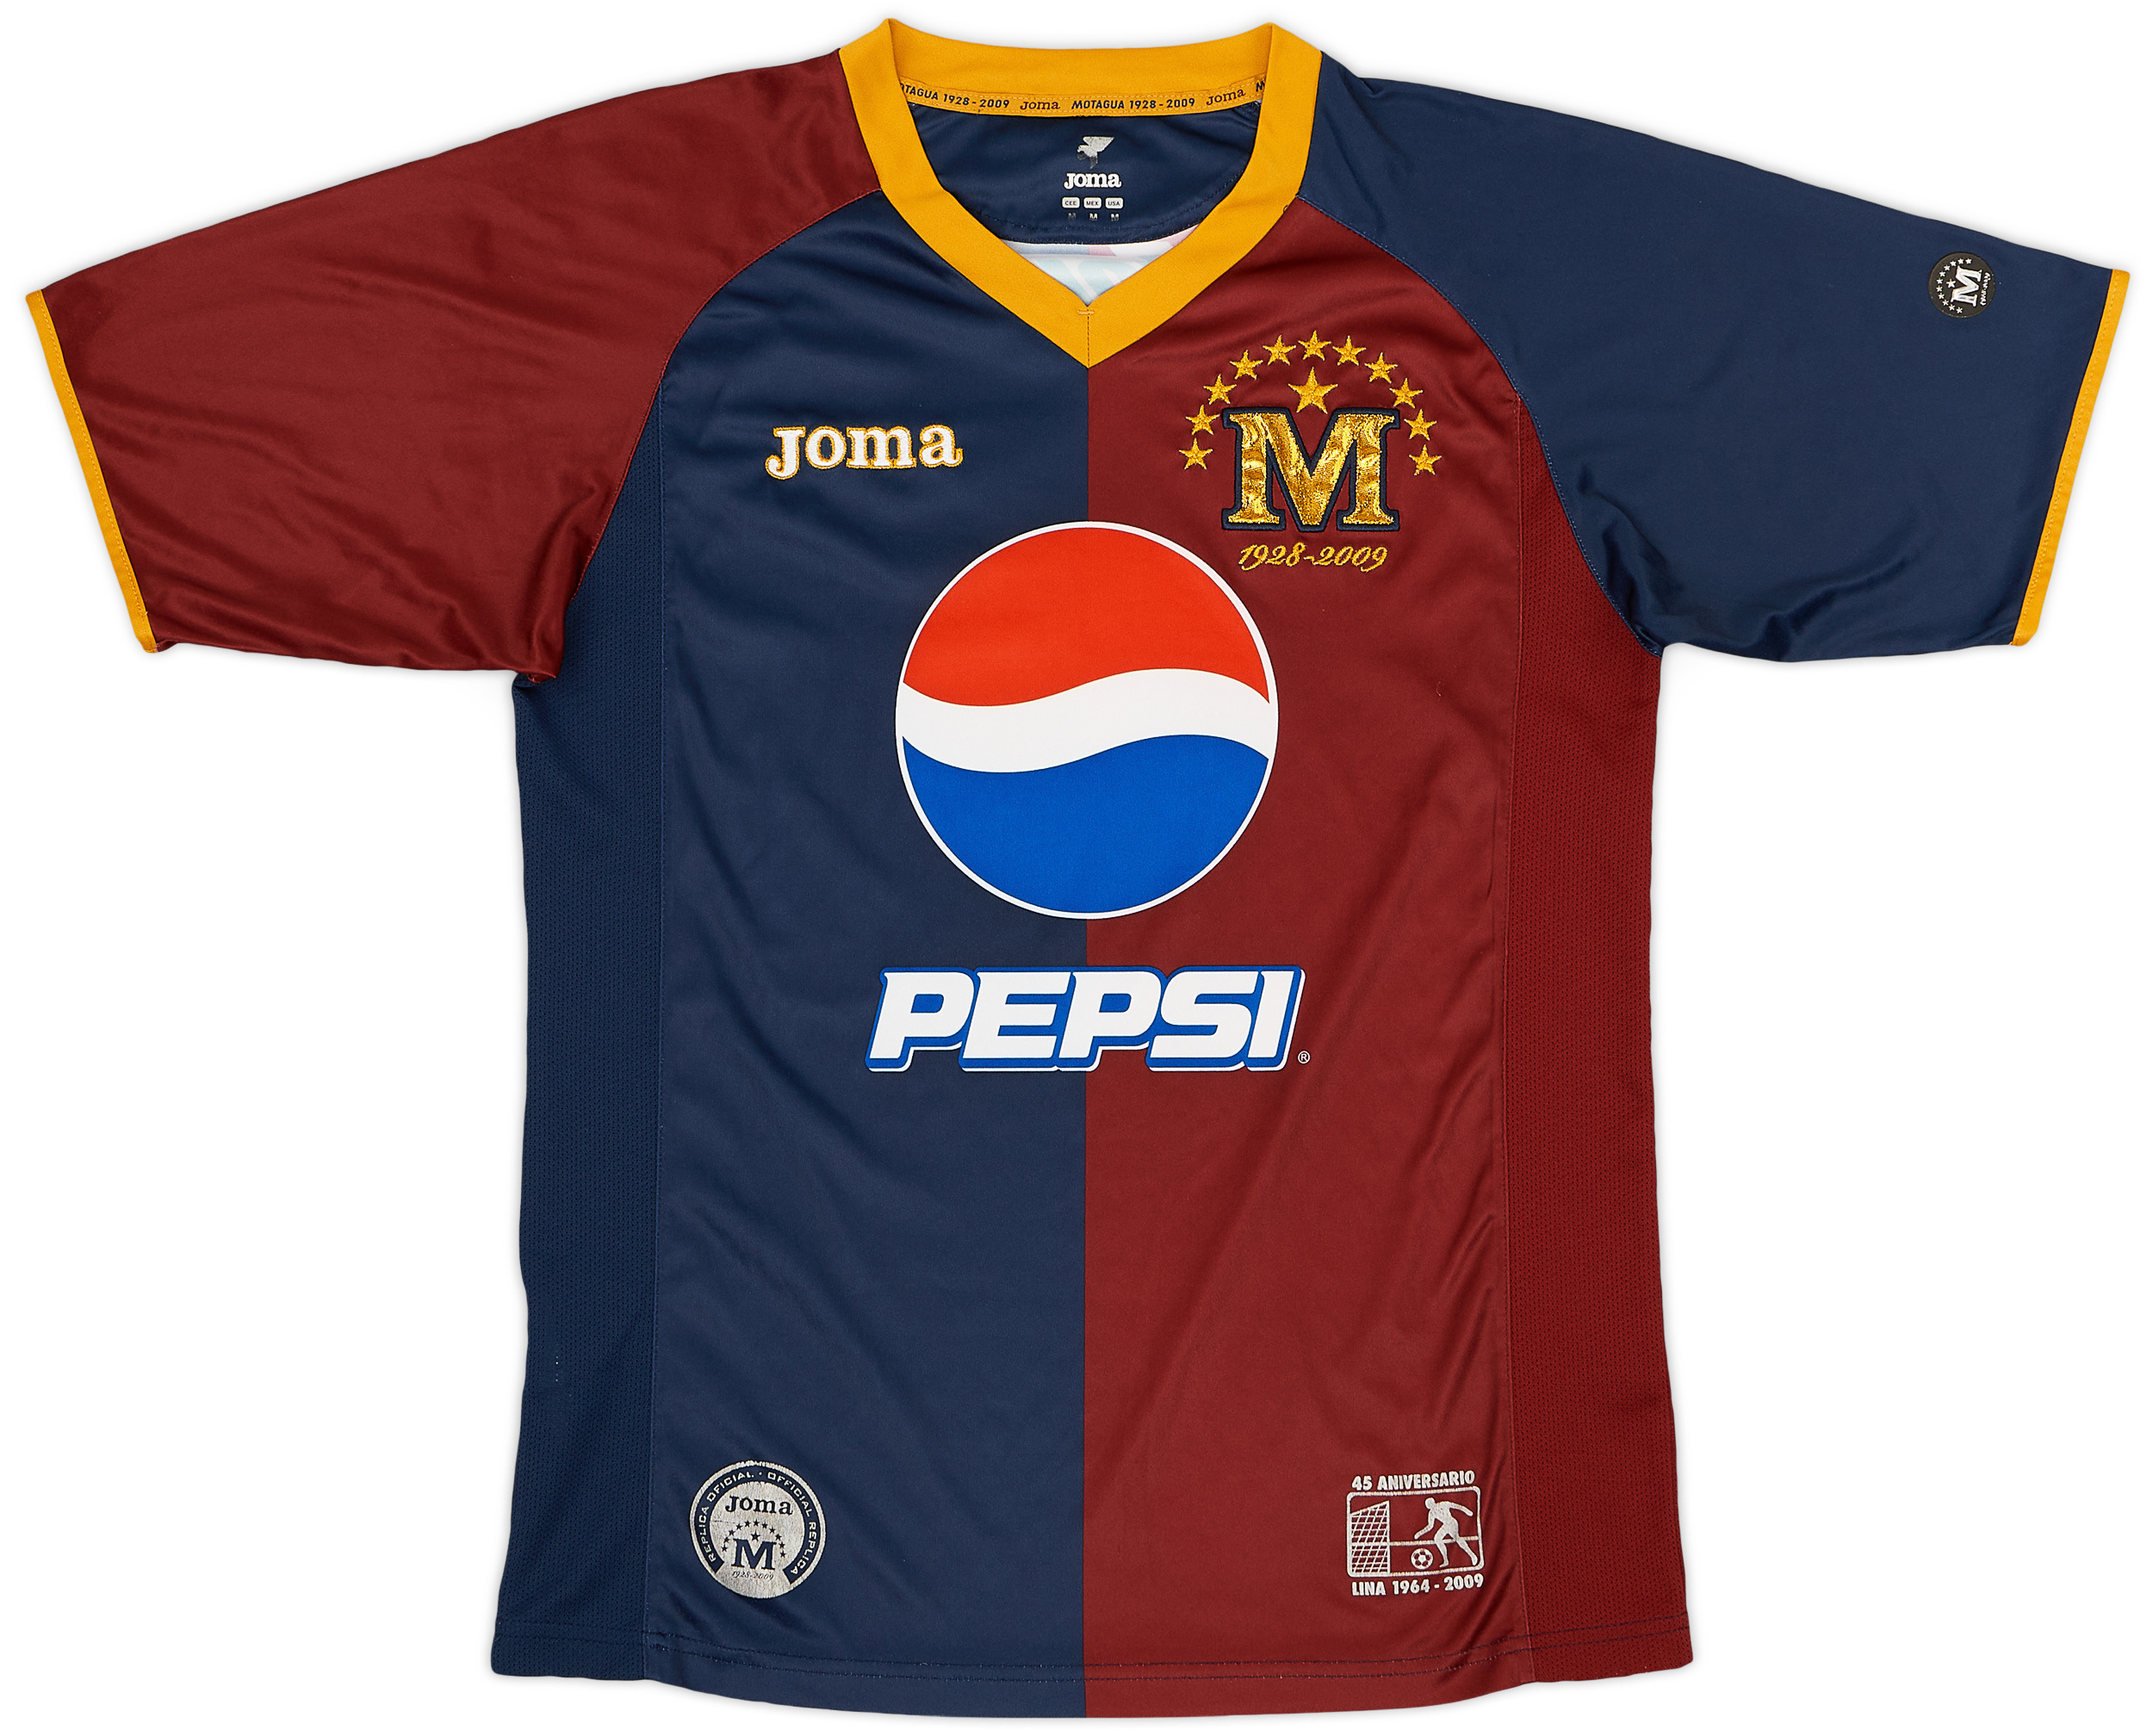 MOTOGUA HONDURAS / JOMA / DIUNSA / PEPSI Lg. Football Soccer Jersey -  EXCELLENT